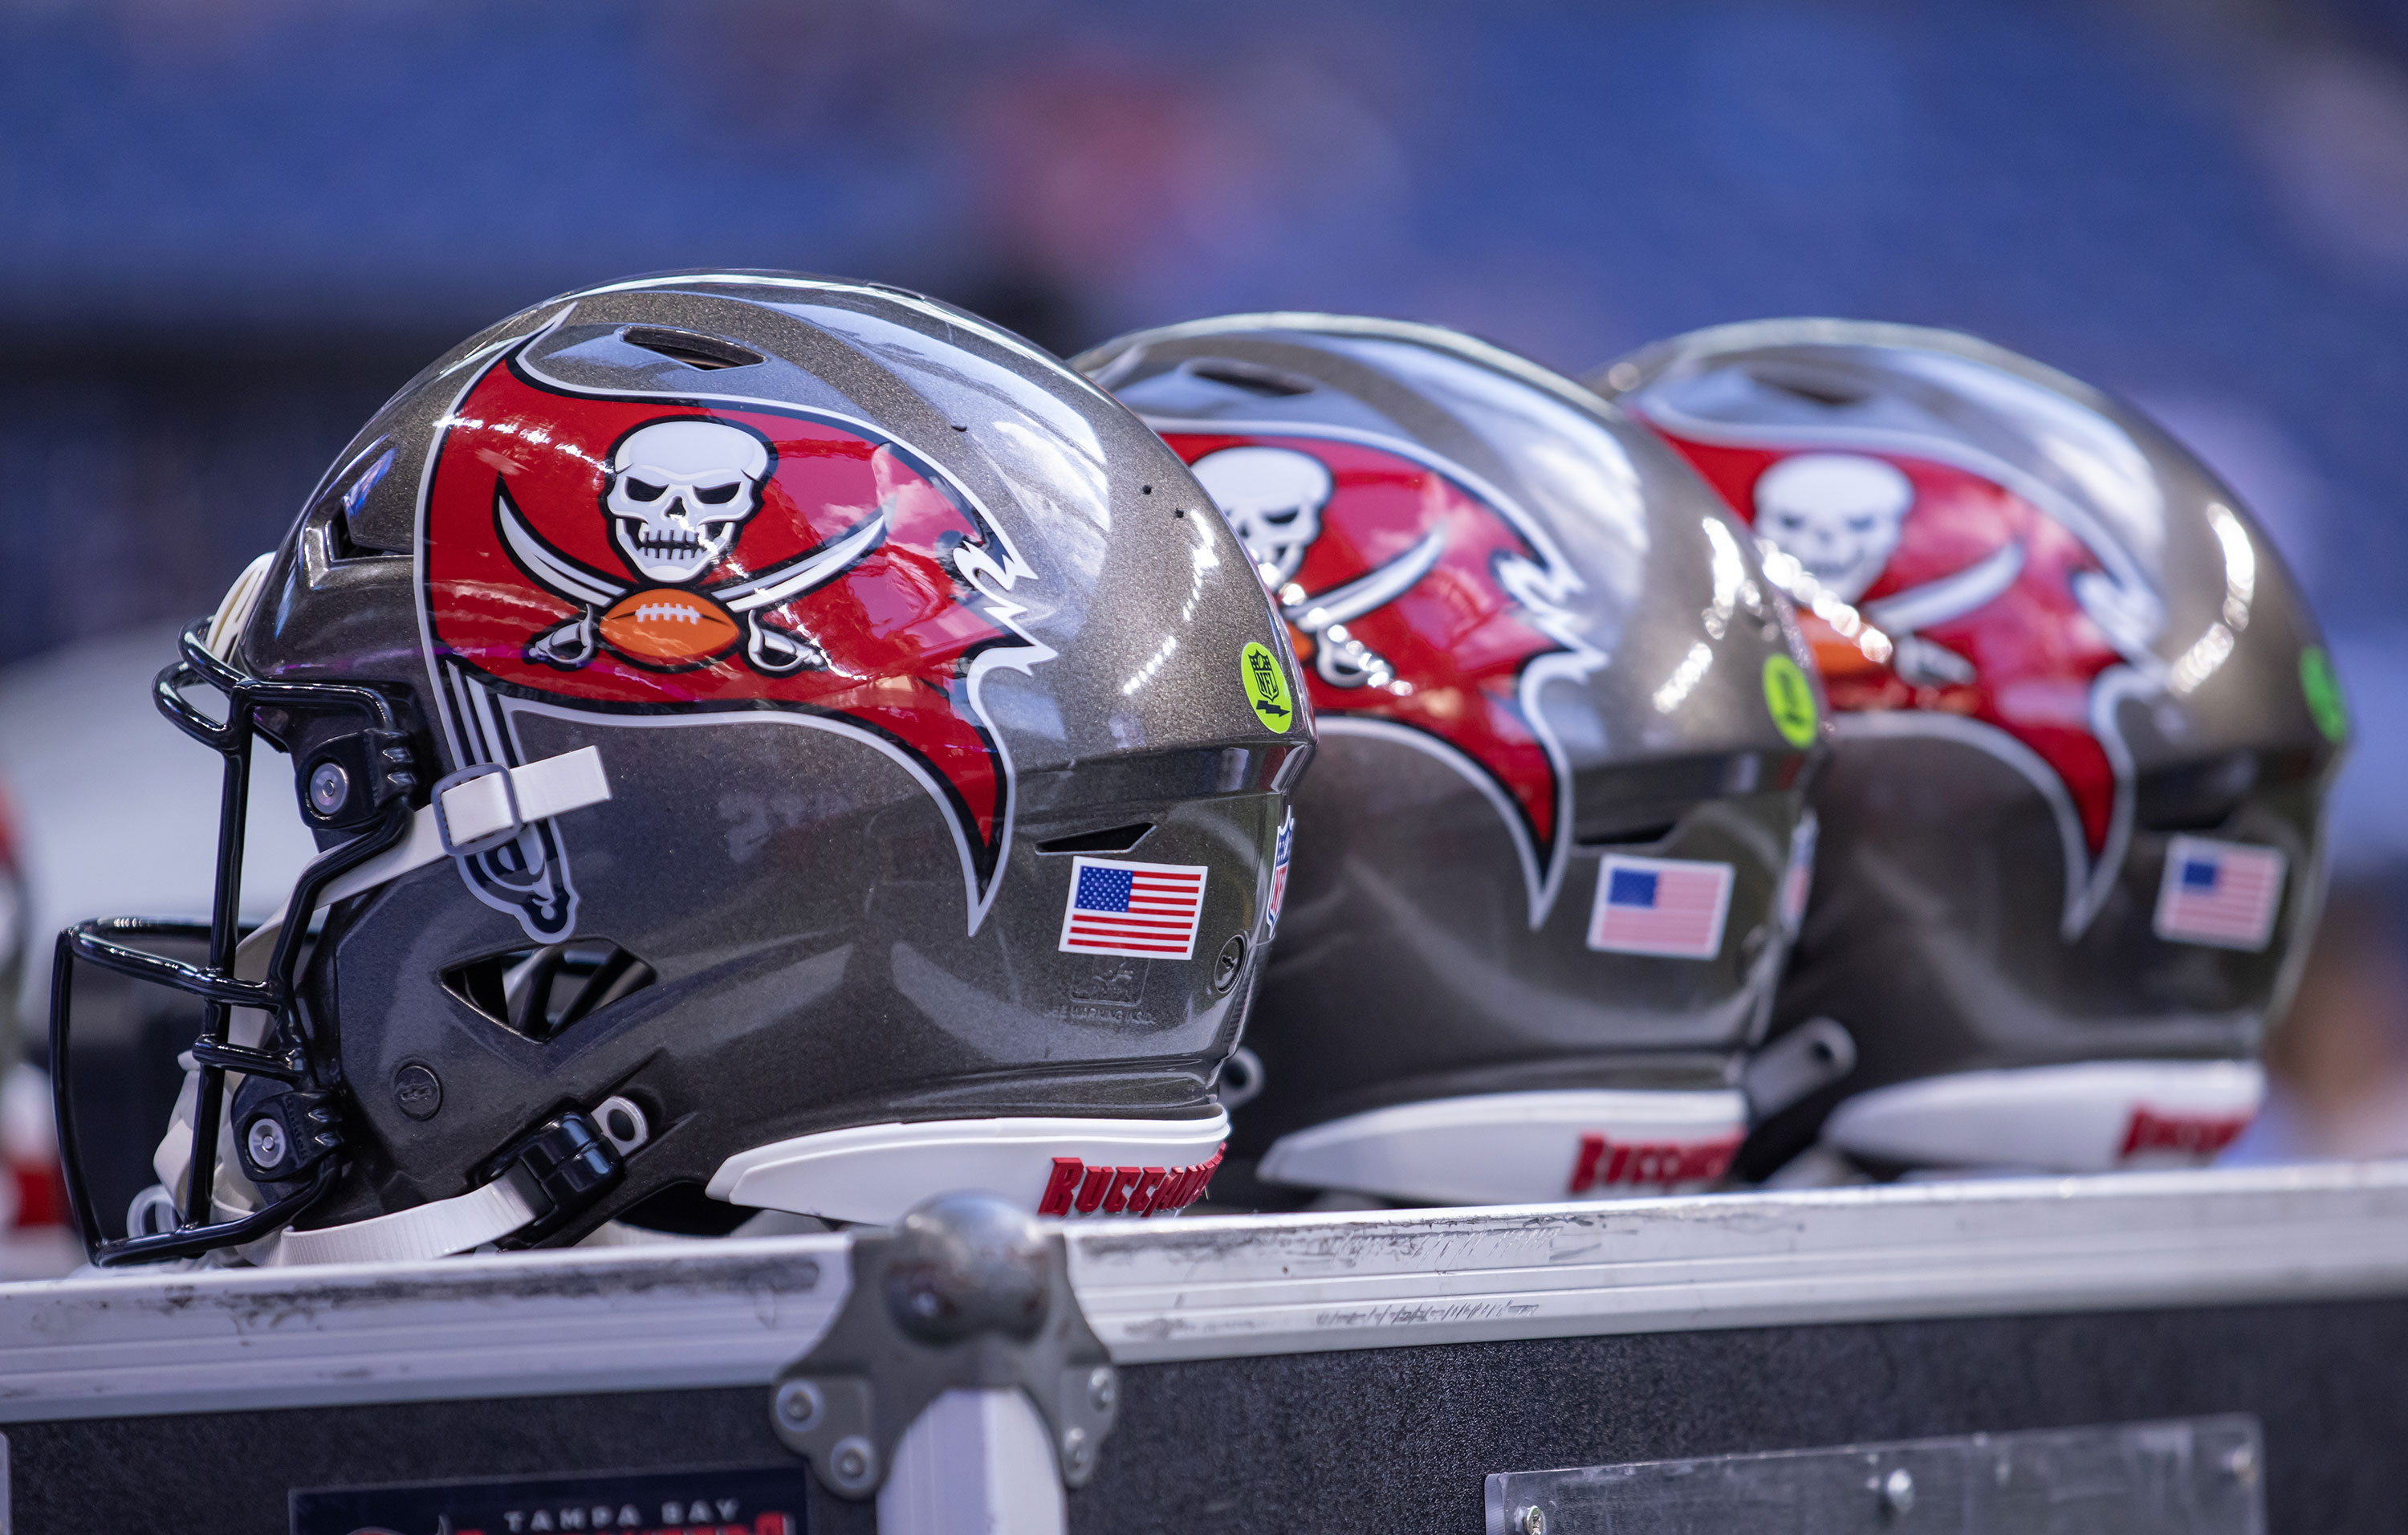 Tampa Bay Buccaneers helmets sit on the sidelines during a preseason game in August 27.